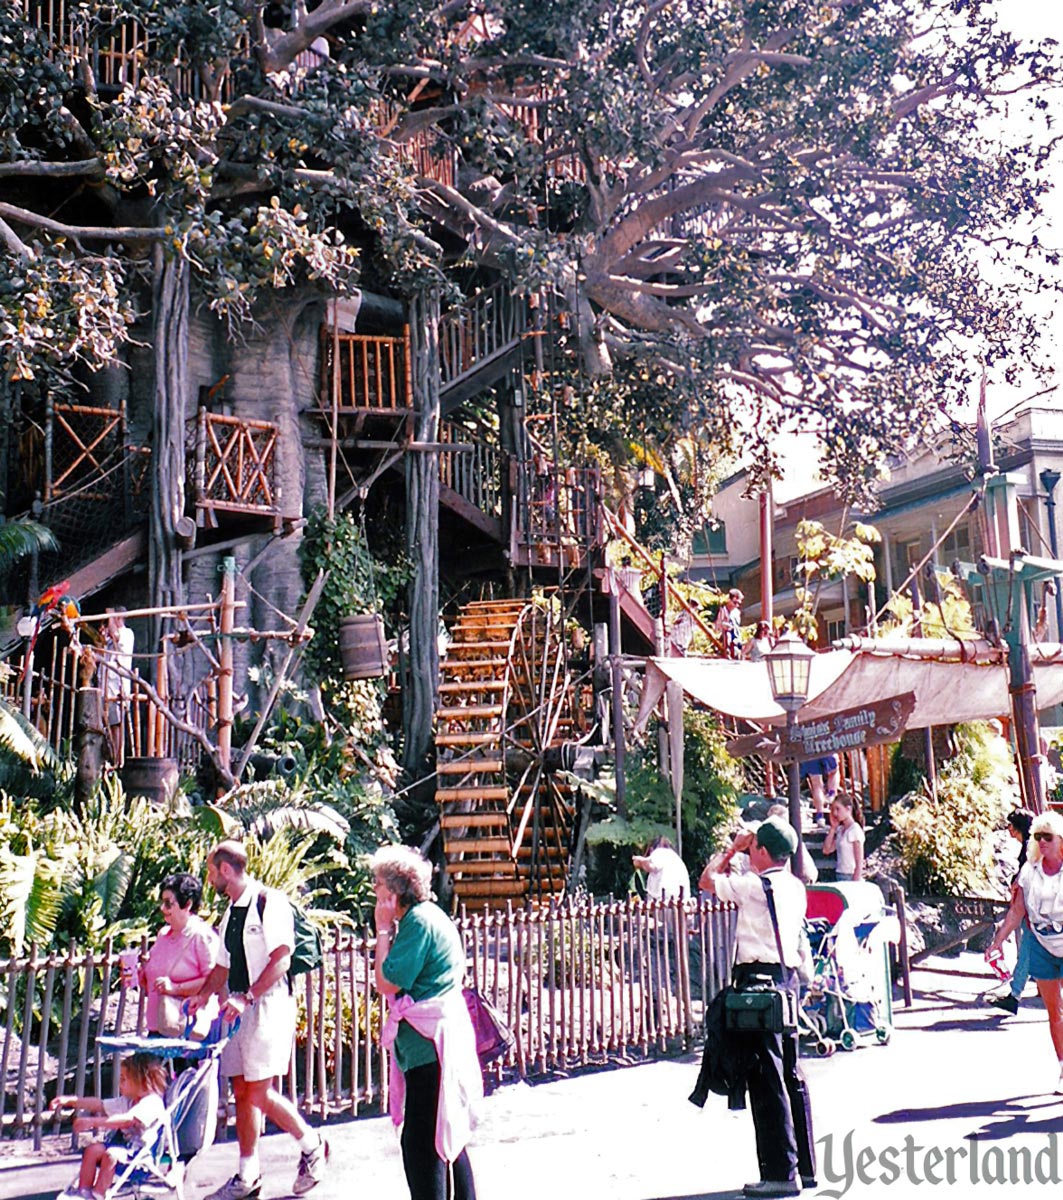 Swiss Family Treehouse, Disneyland